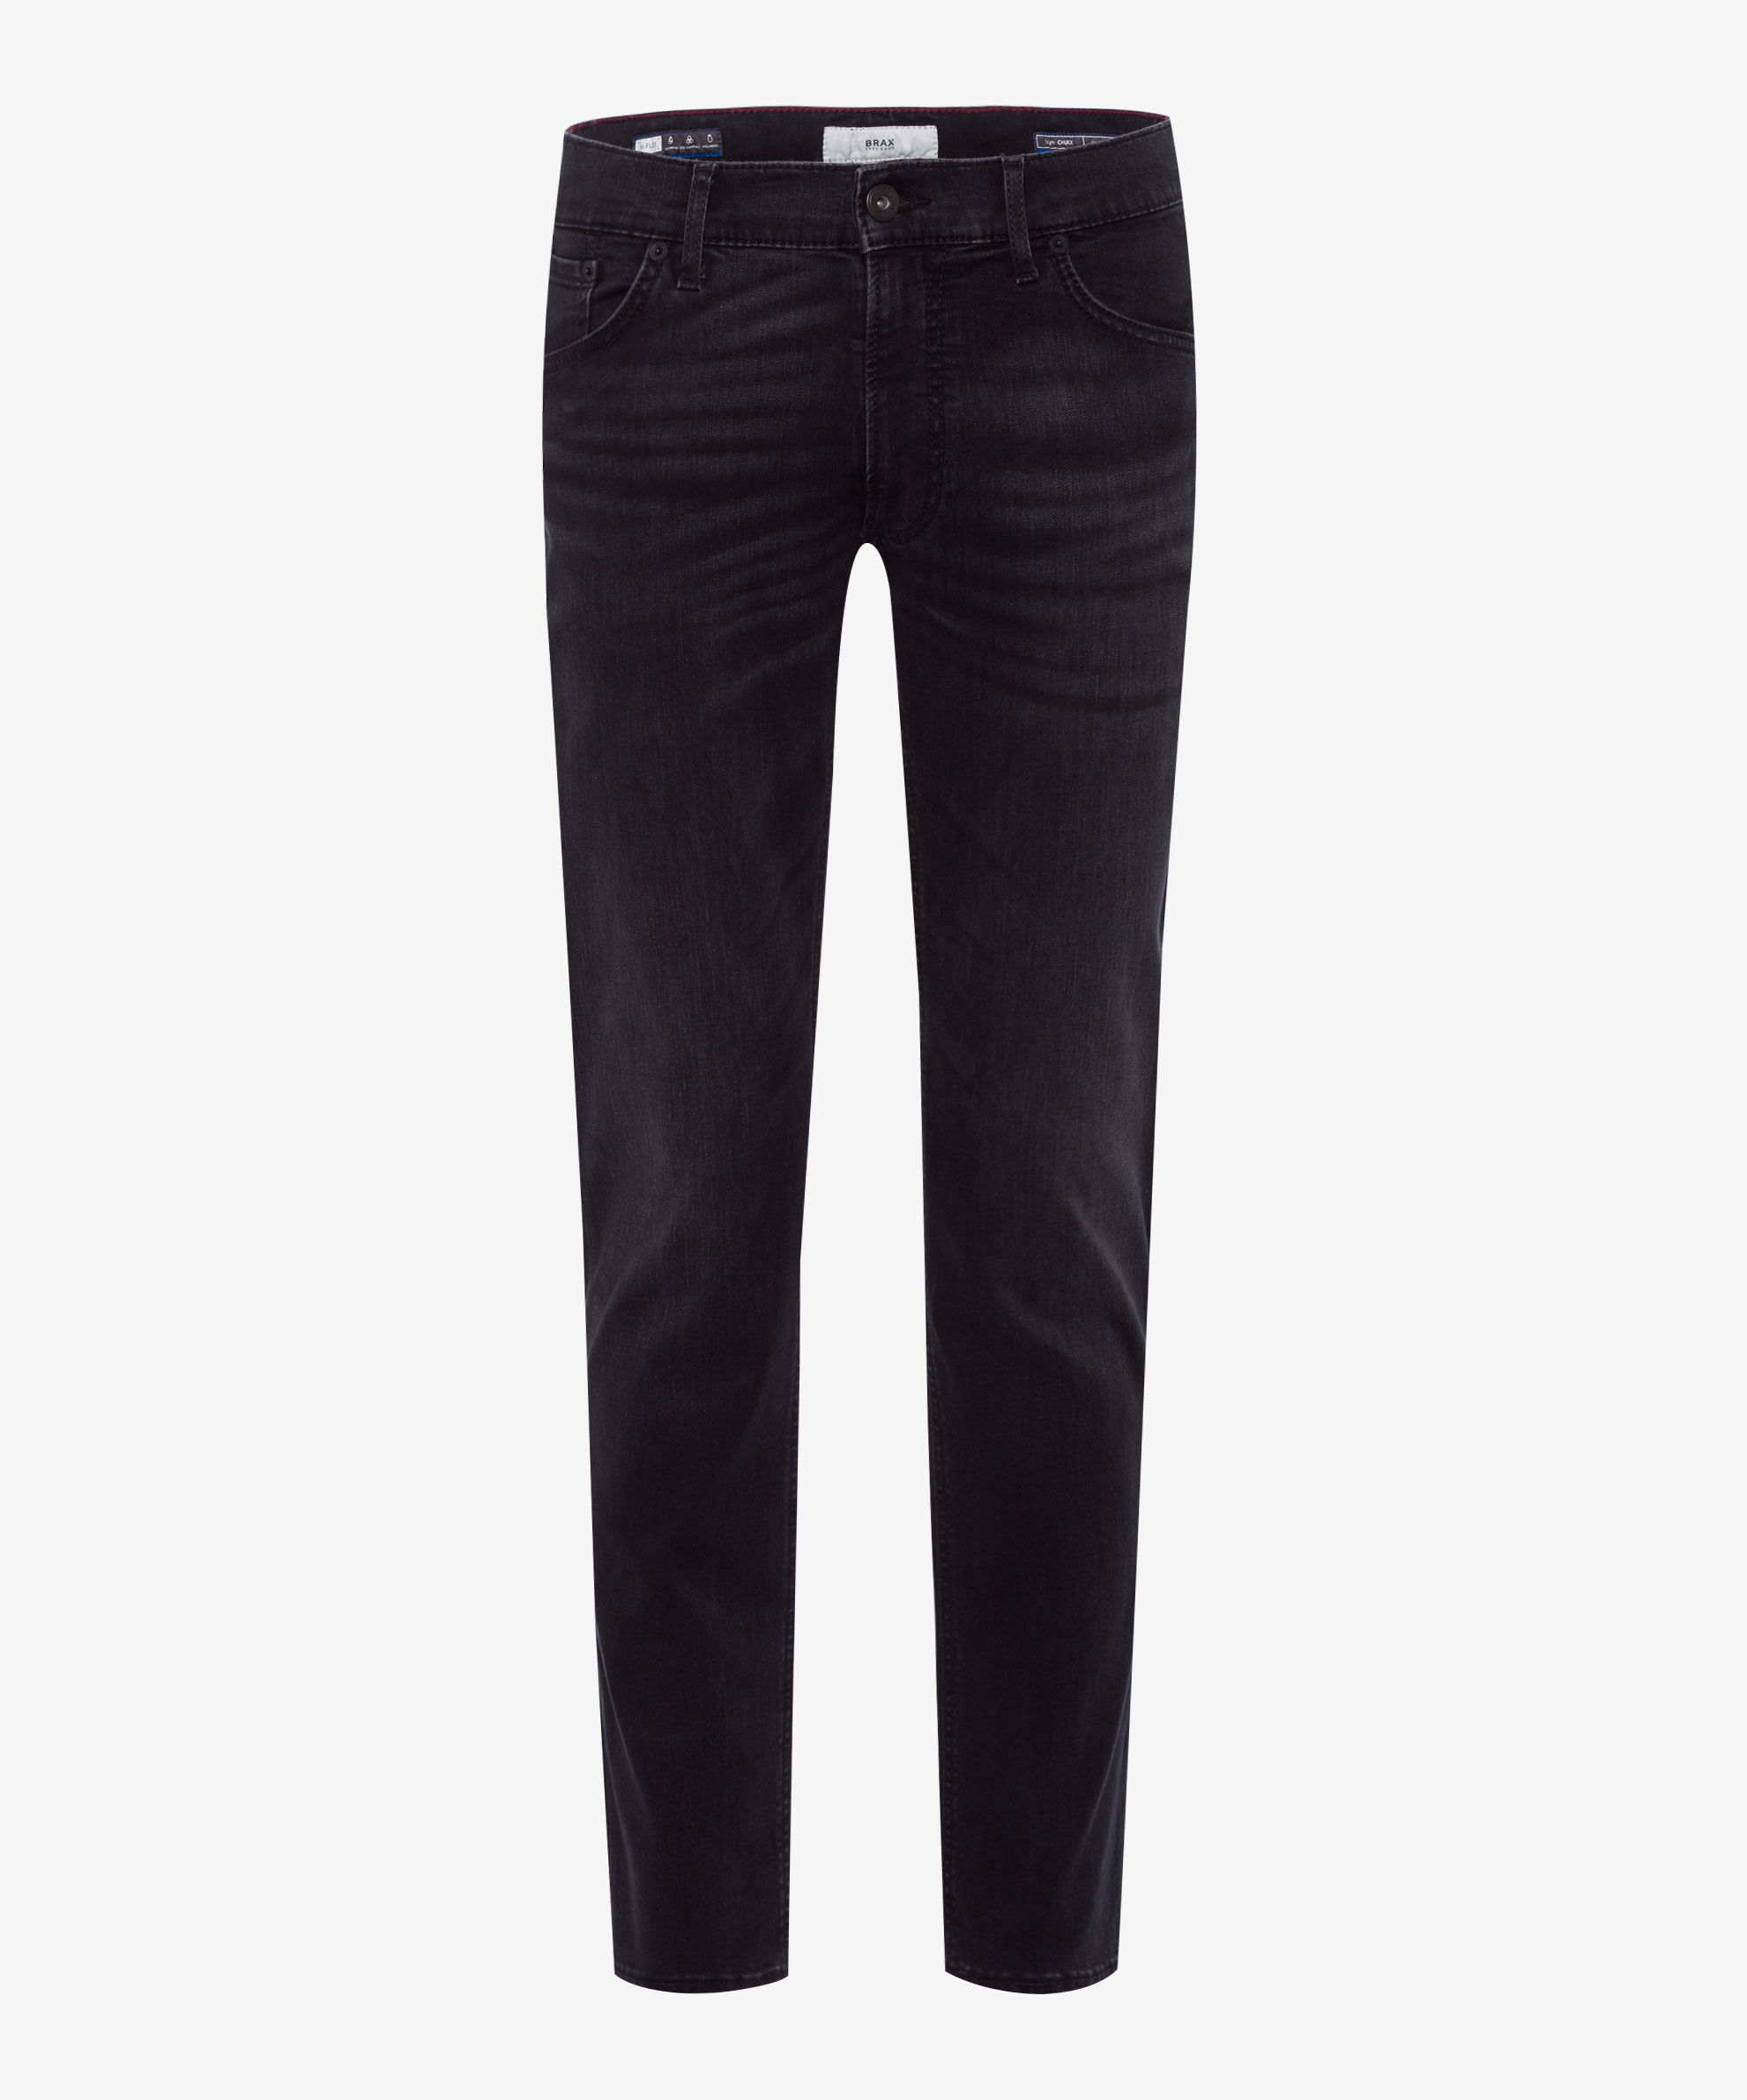 Hartmann Chuck Shop Mode Brax Slim Style Herren Five-Pocket-Jeans Hi-FLEX im Fit -